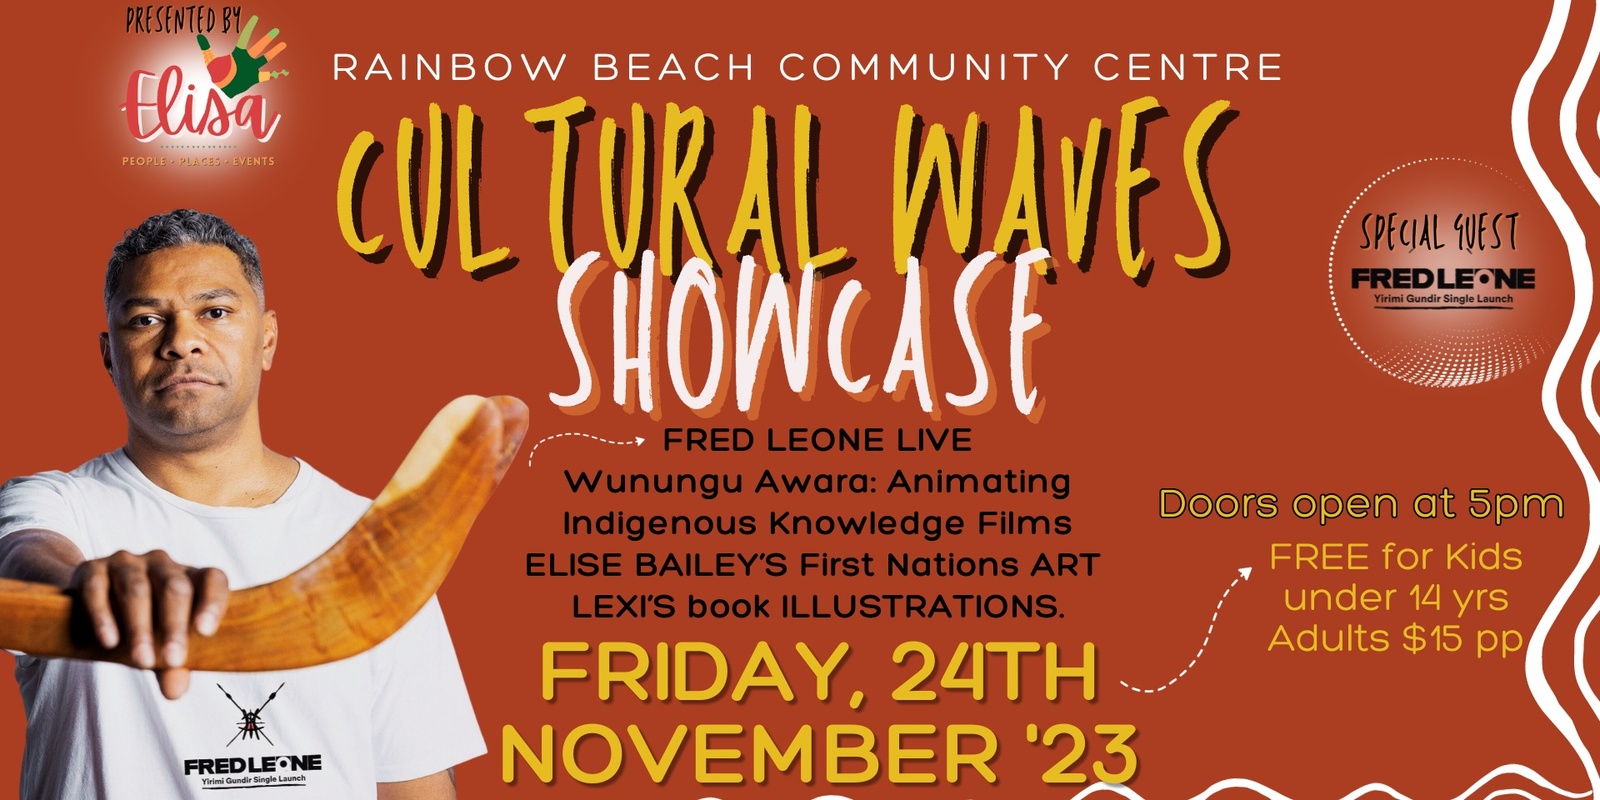 Banner image for Cultural Waves Showcase - Rainbow Beach